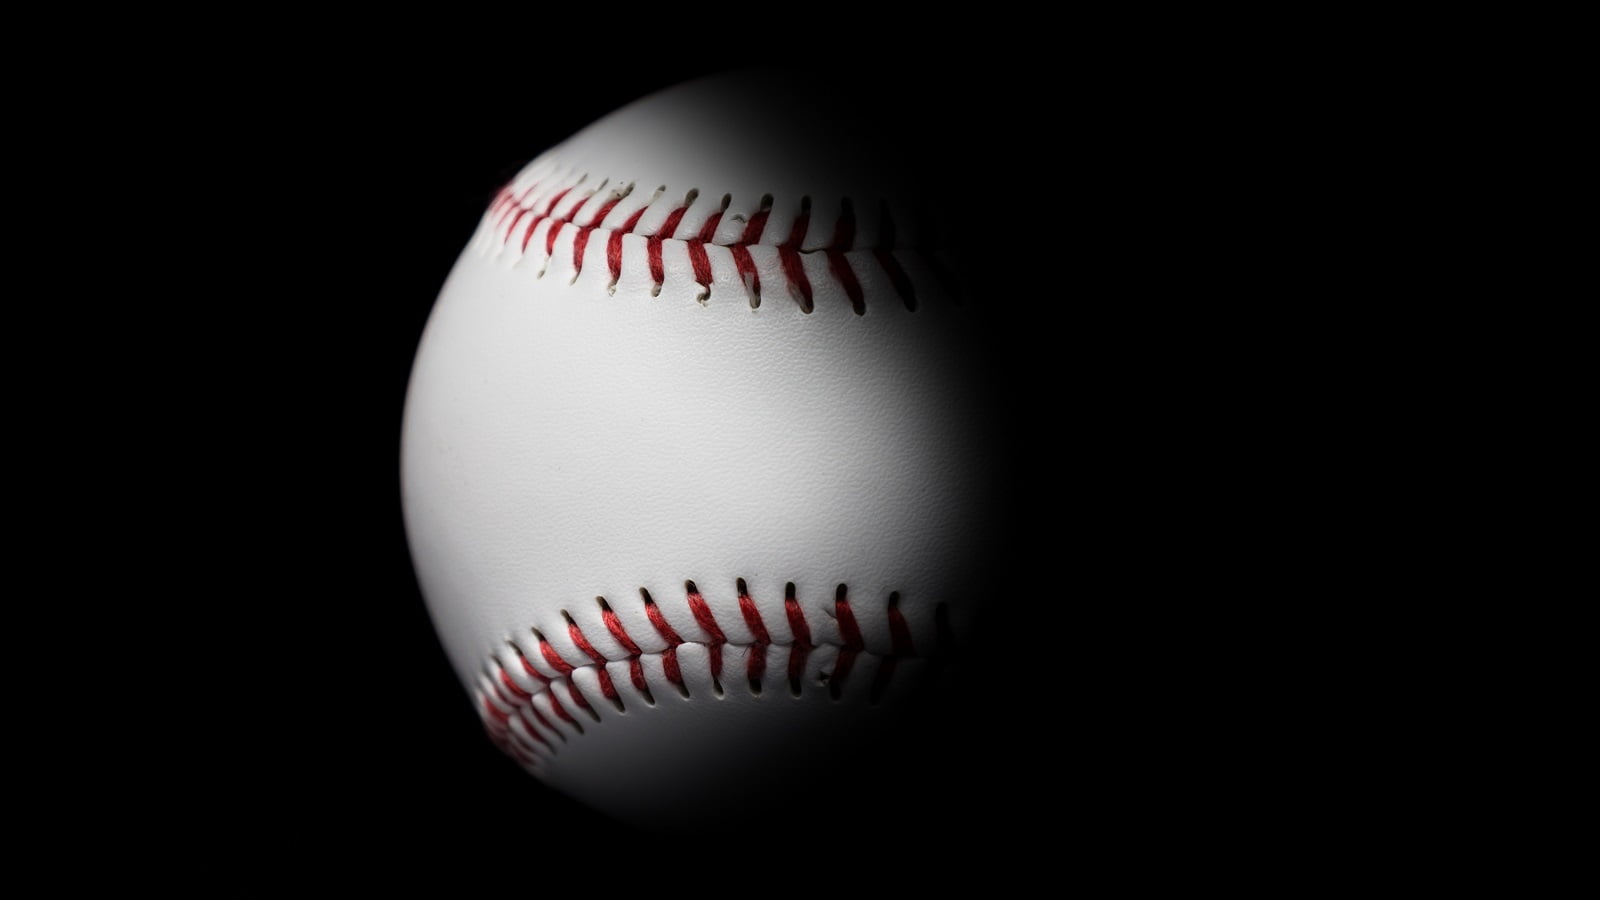 Baseball in black background.